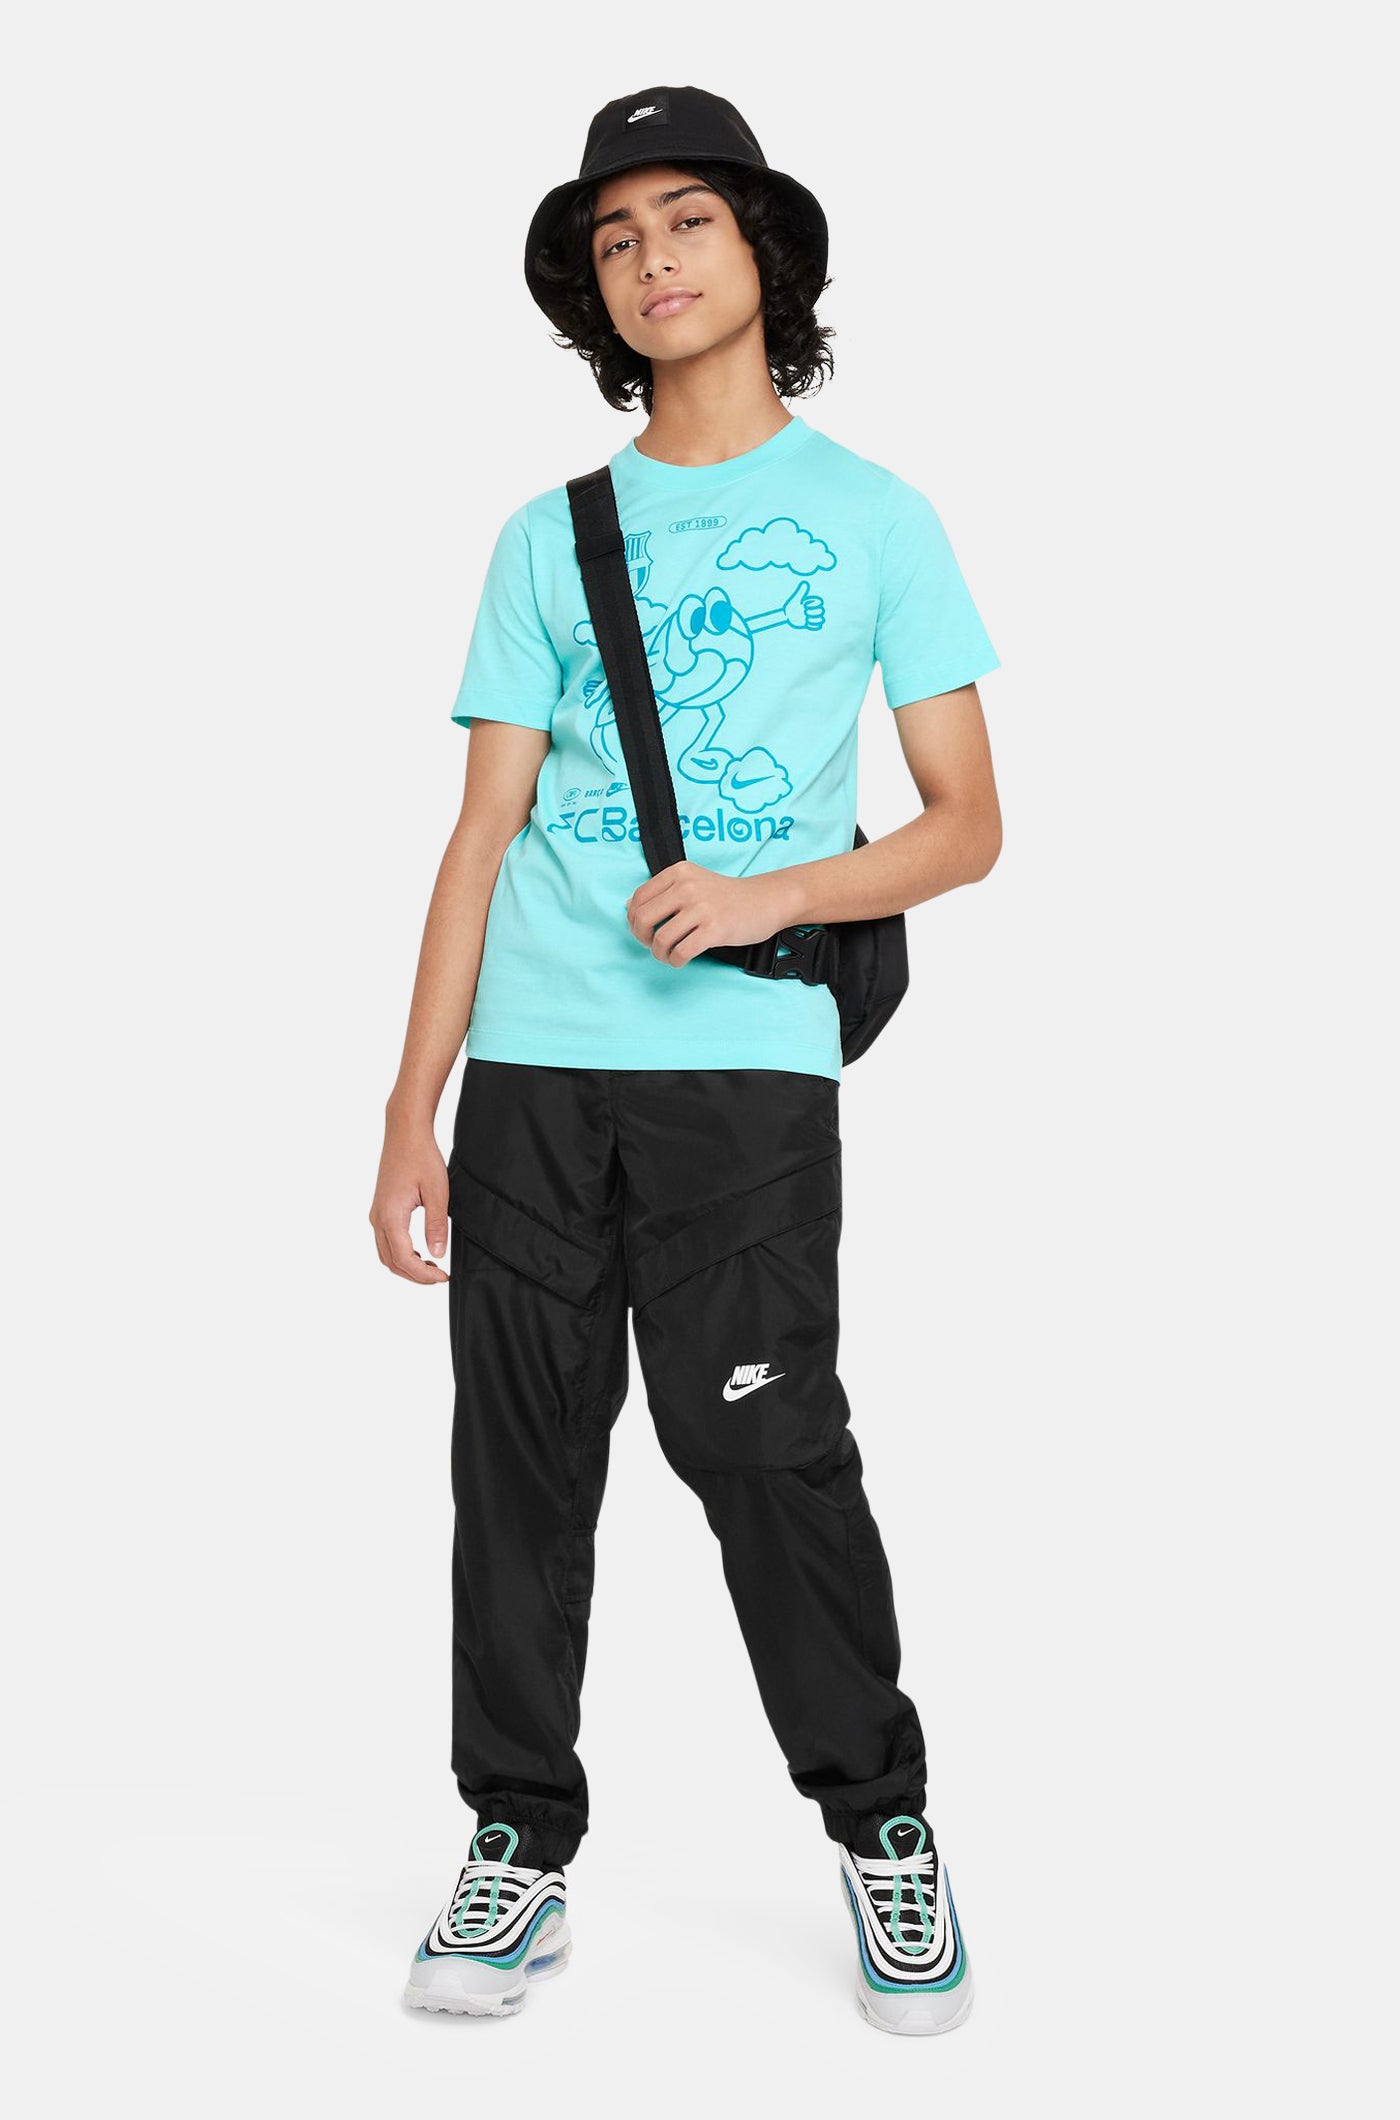 FC Barcelona Nike Air T-Shirt – Junior